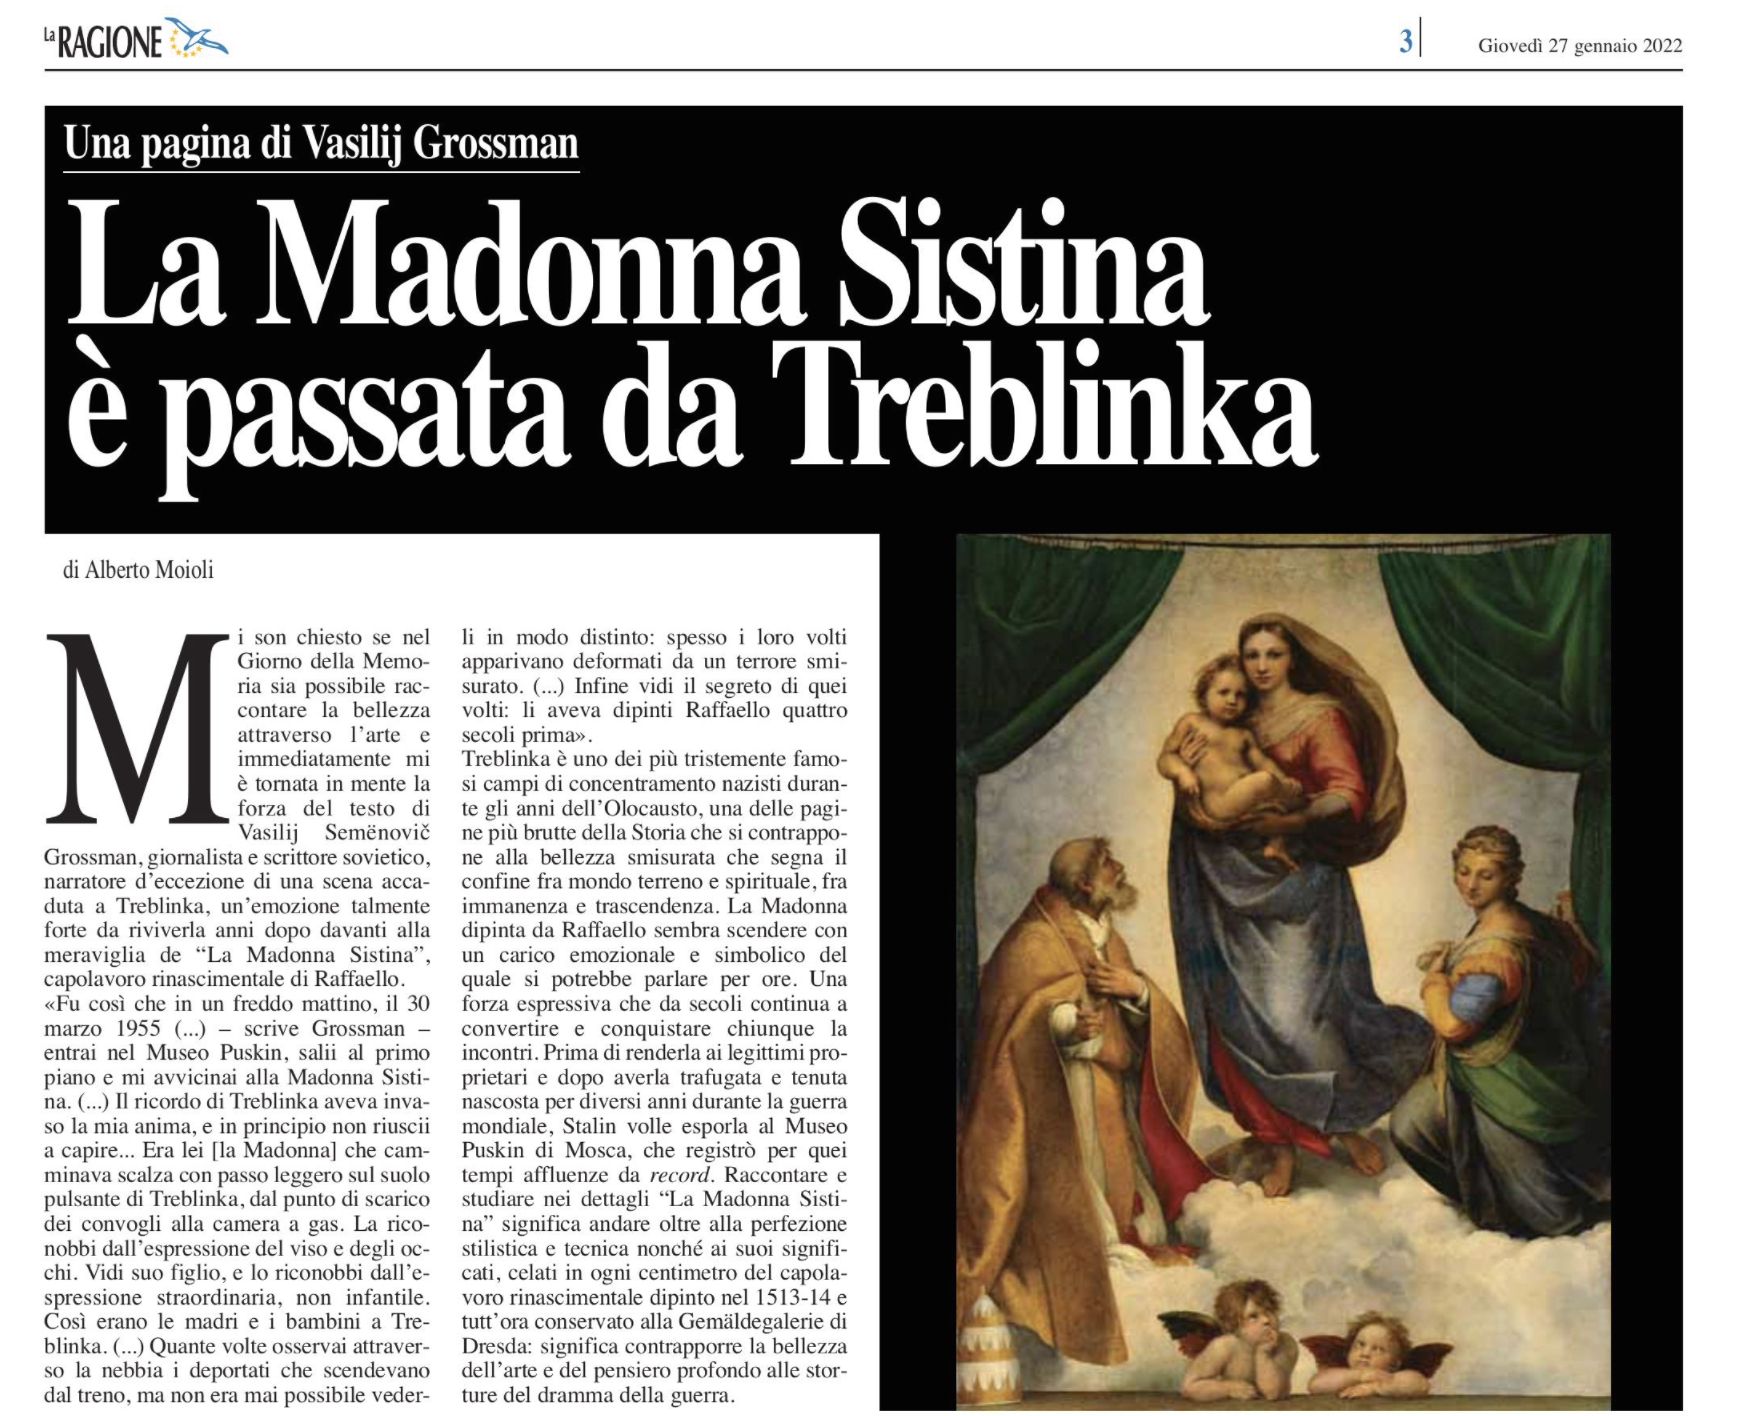 La Madonna Sistina è passata da Treblinka